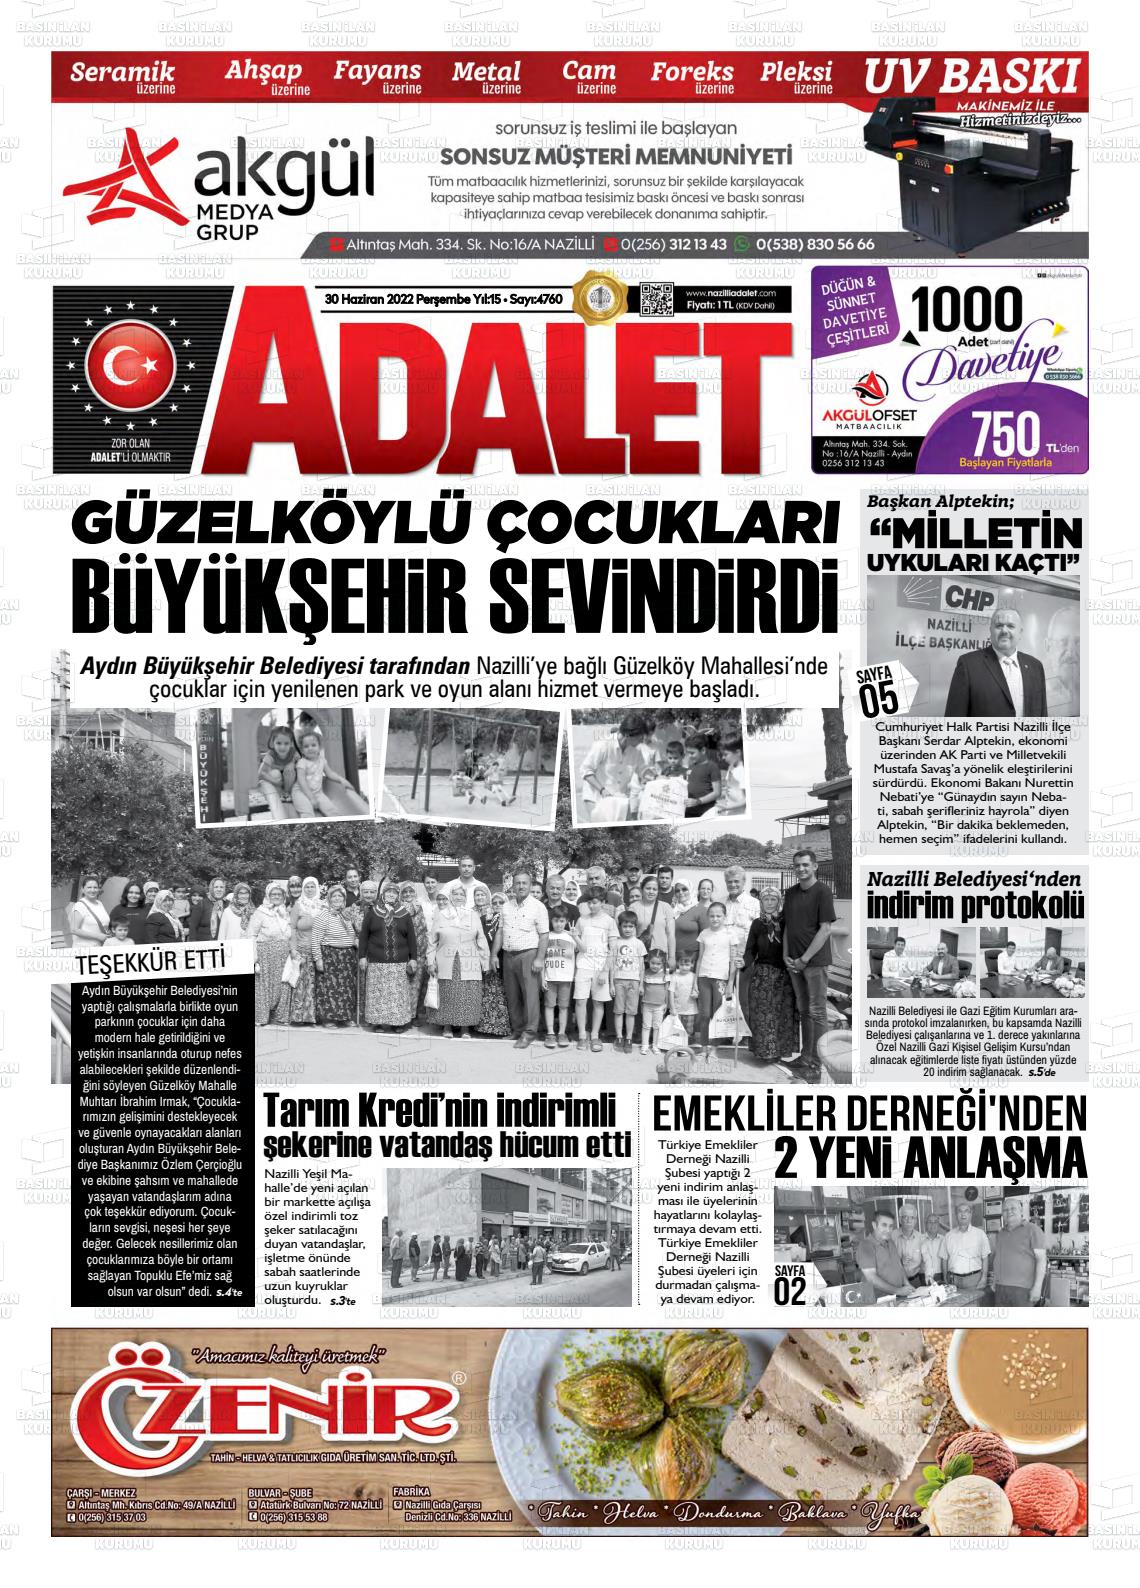 30 Haziran 2022 Nazilli Adalet Gazete Manşeti